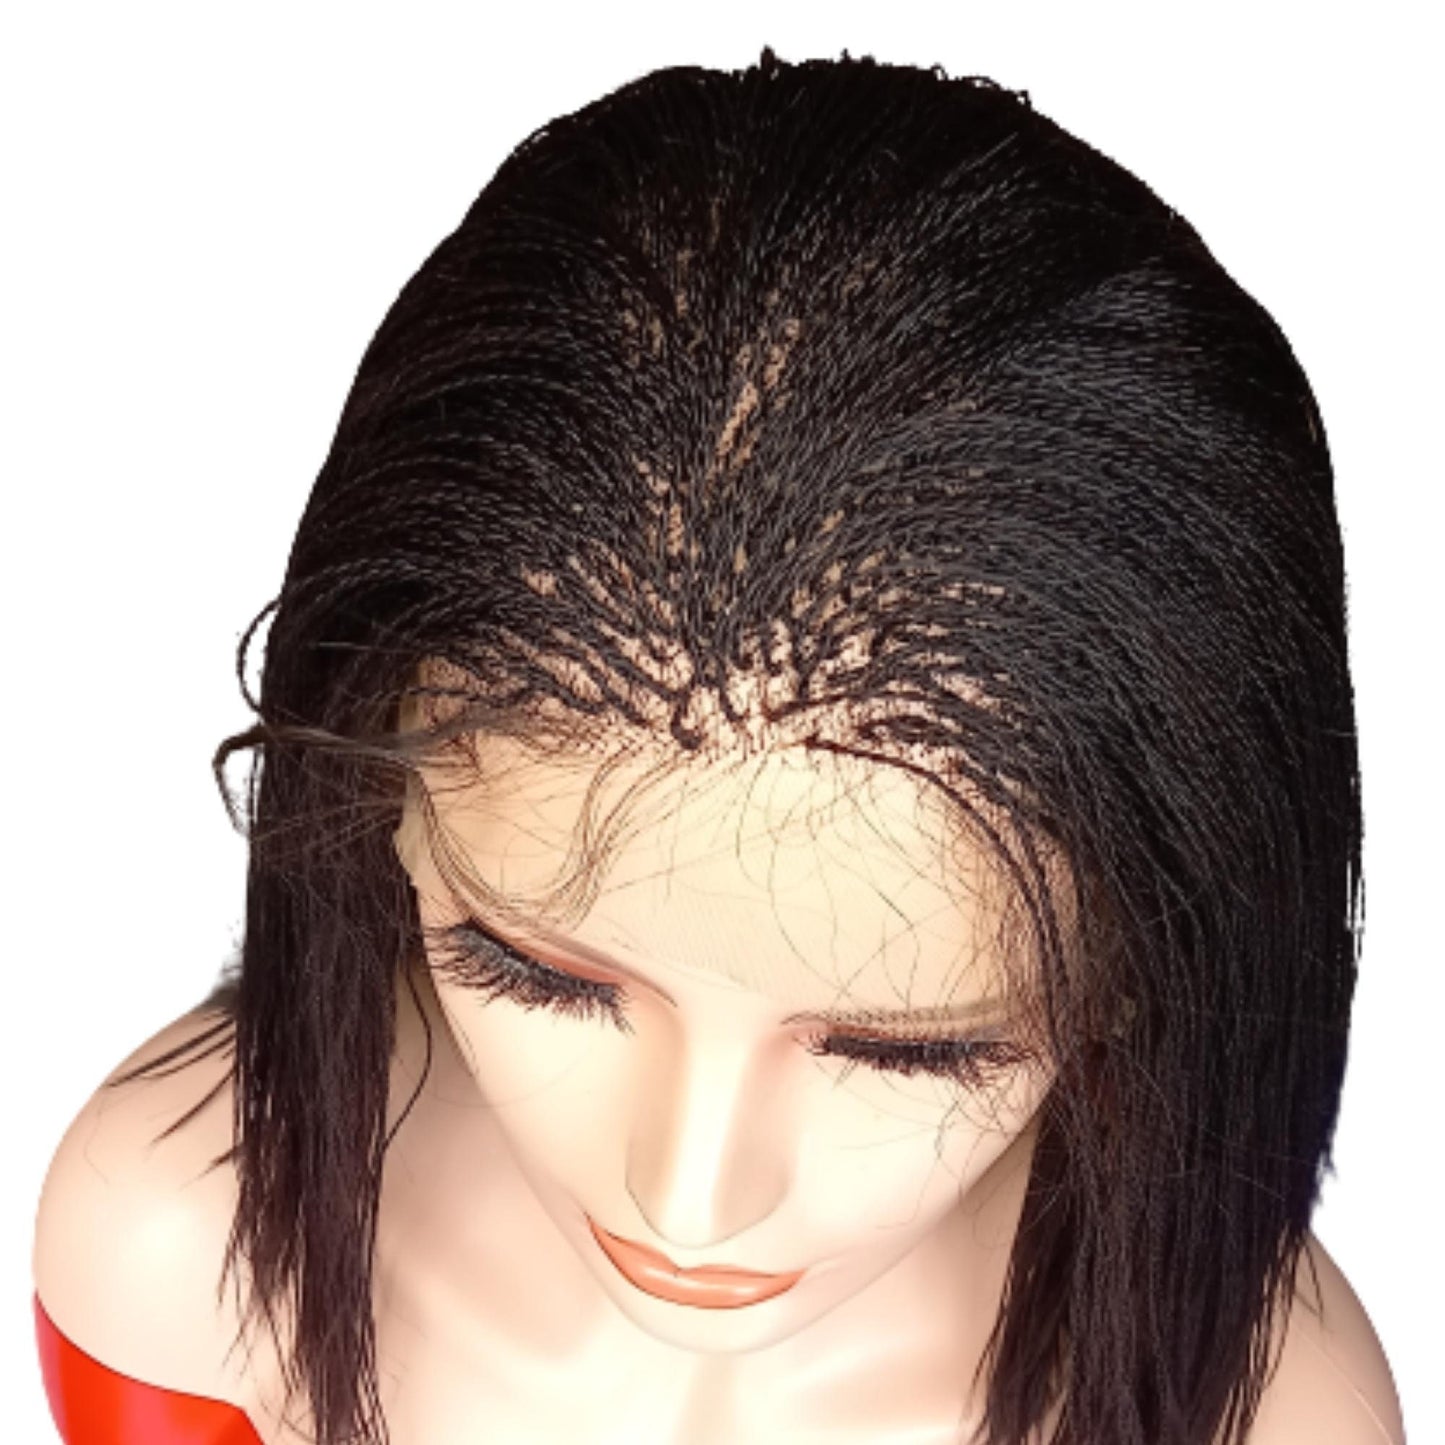 2 in 1 set of braided wigs, micro million braid wig, knotless braid wig, cheap box braid synthetic braid wigs, braided wigs for black women - BRAIDED WIG BOSS